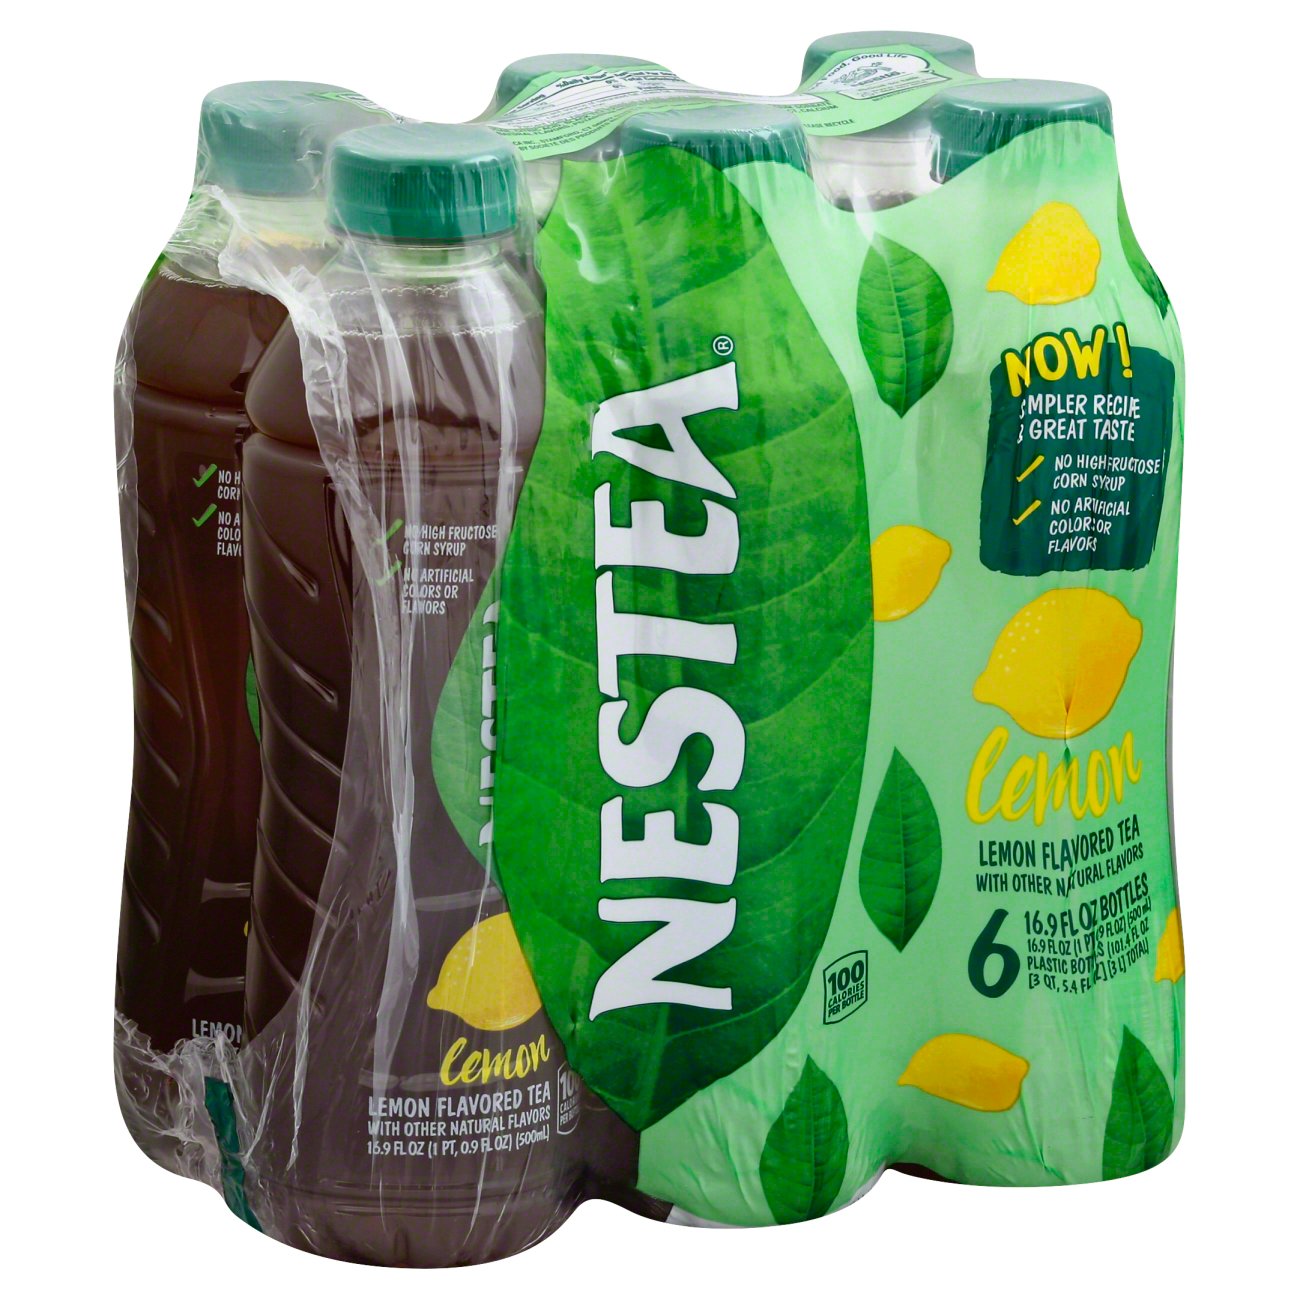 nestea iced tea nutrition facts